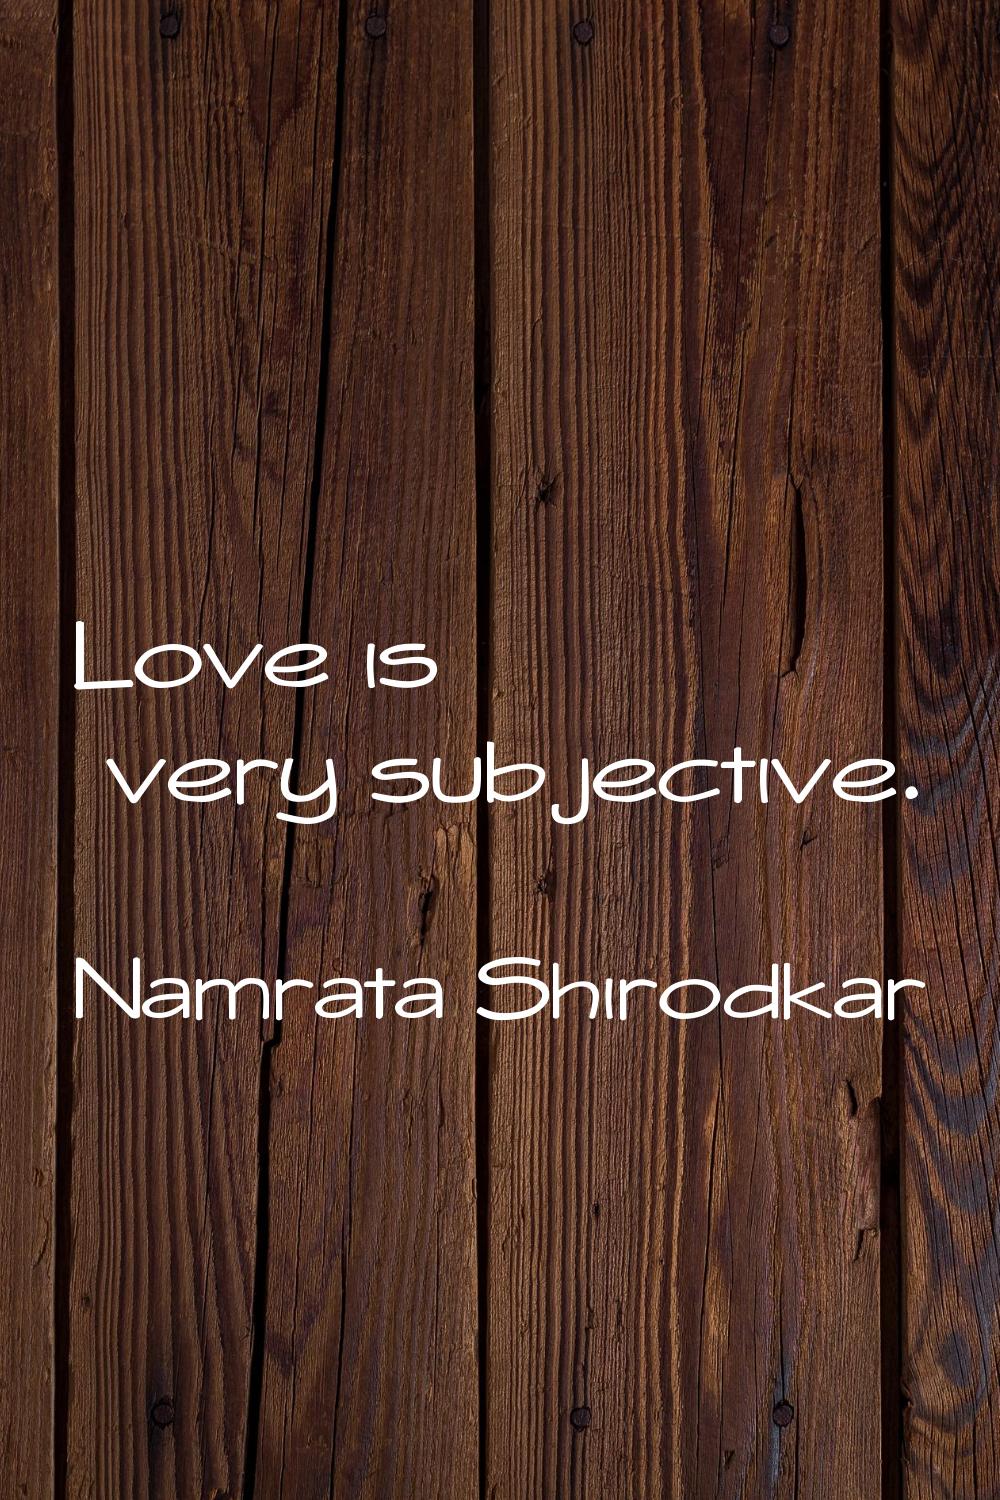 Love is very subjective.